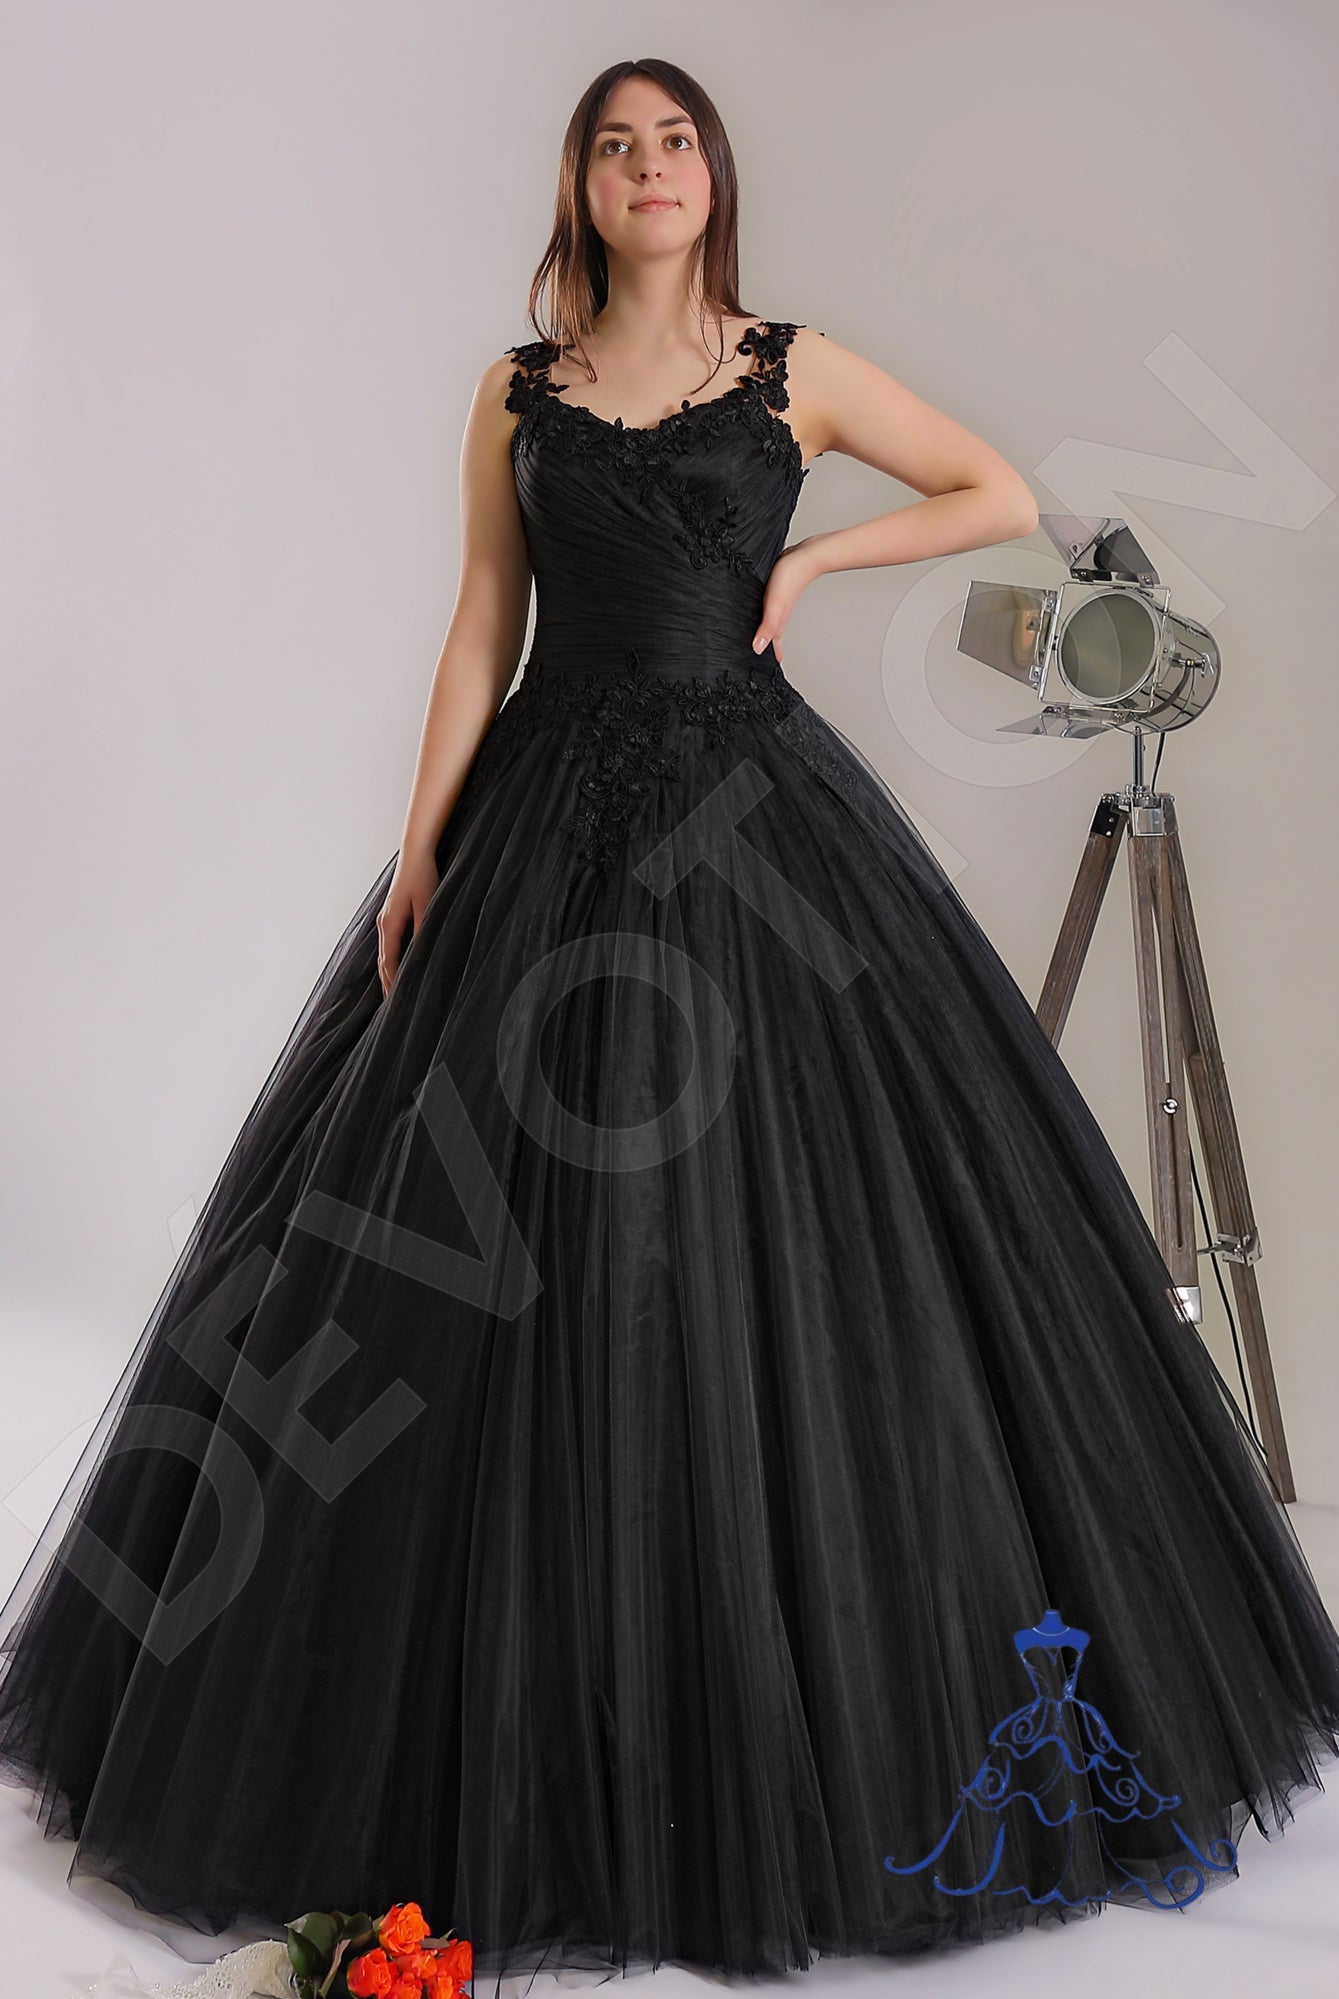 Leonie Princess/Ball Gown V-neck Black Wedding dress